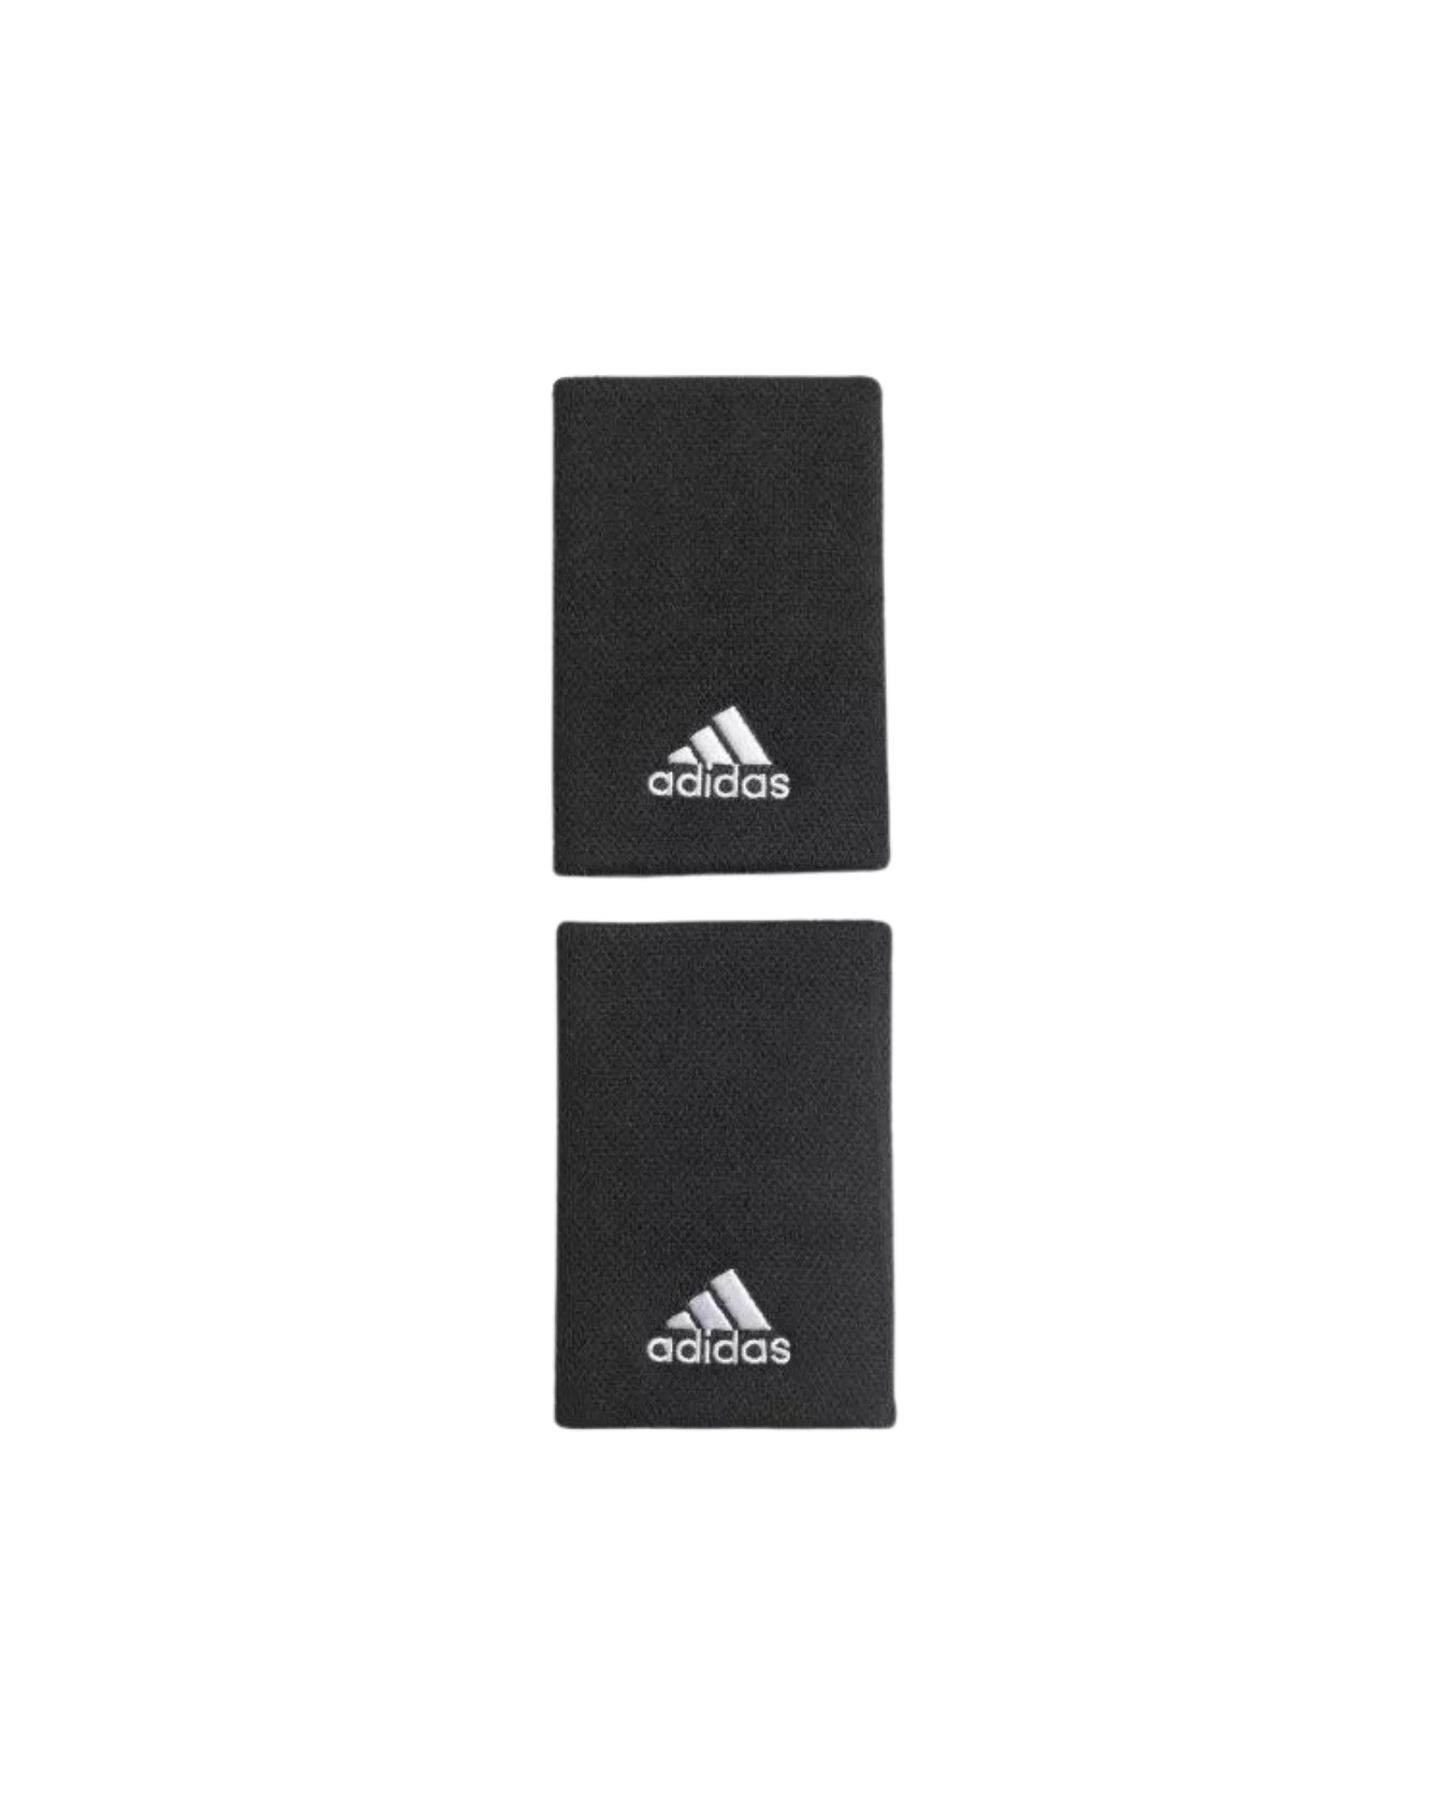 The Adidas WRISTBAND L x2 BLACK/WHITE